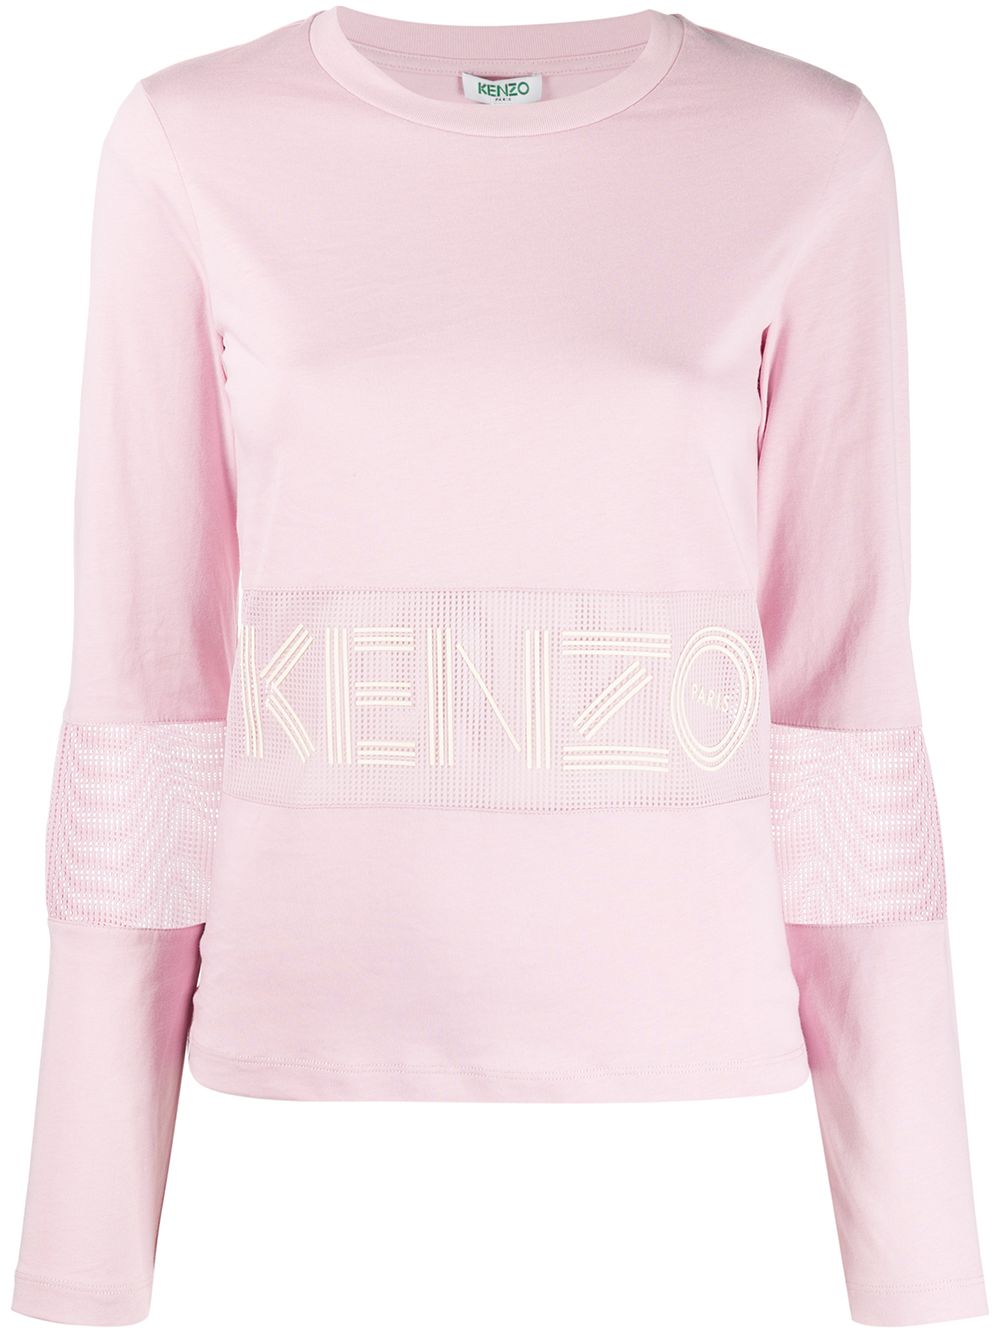 Kenzo 镂空logo T恤 In Pink